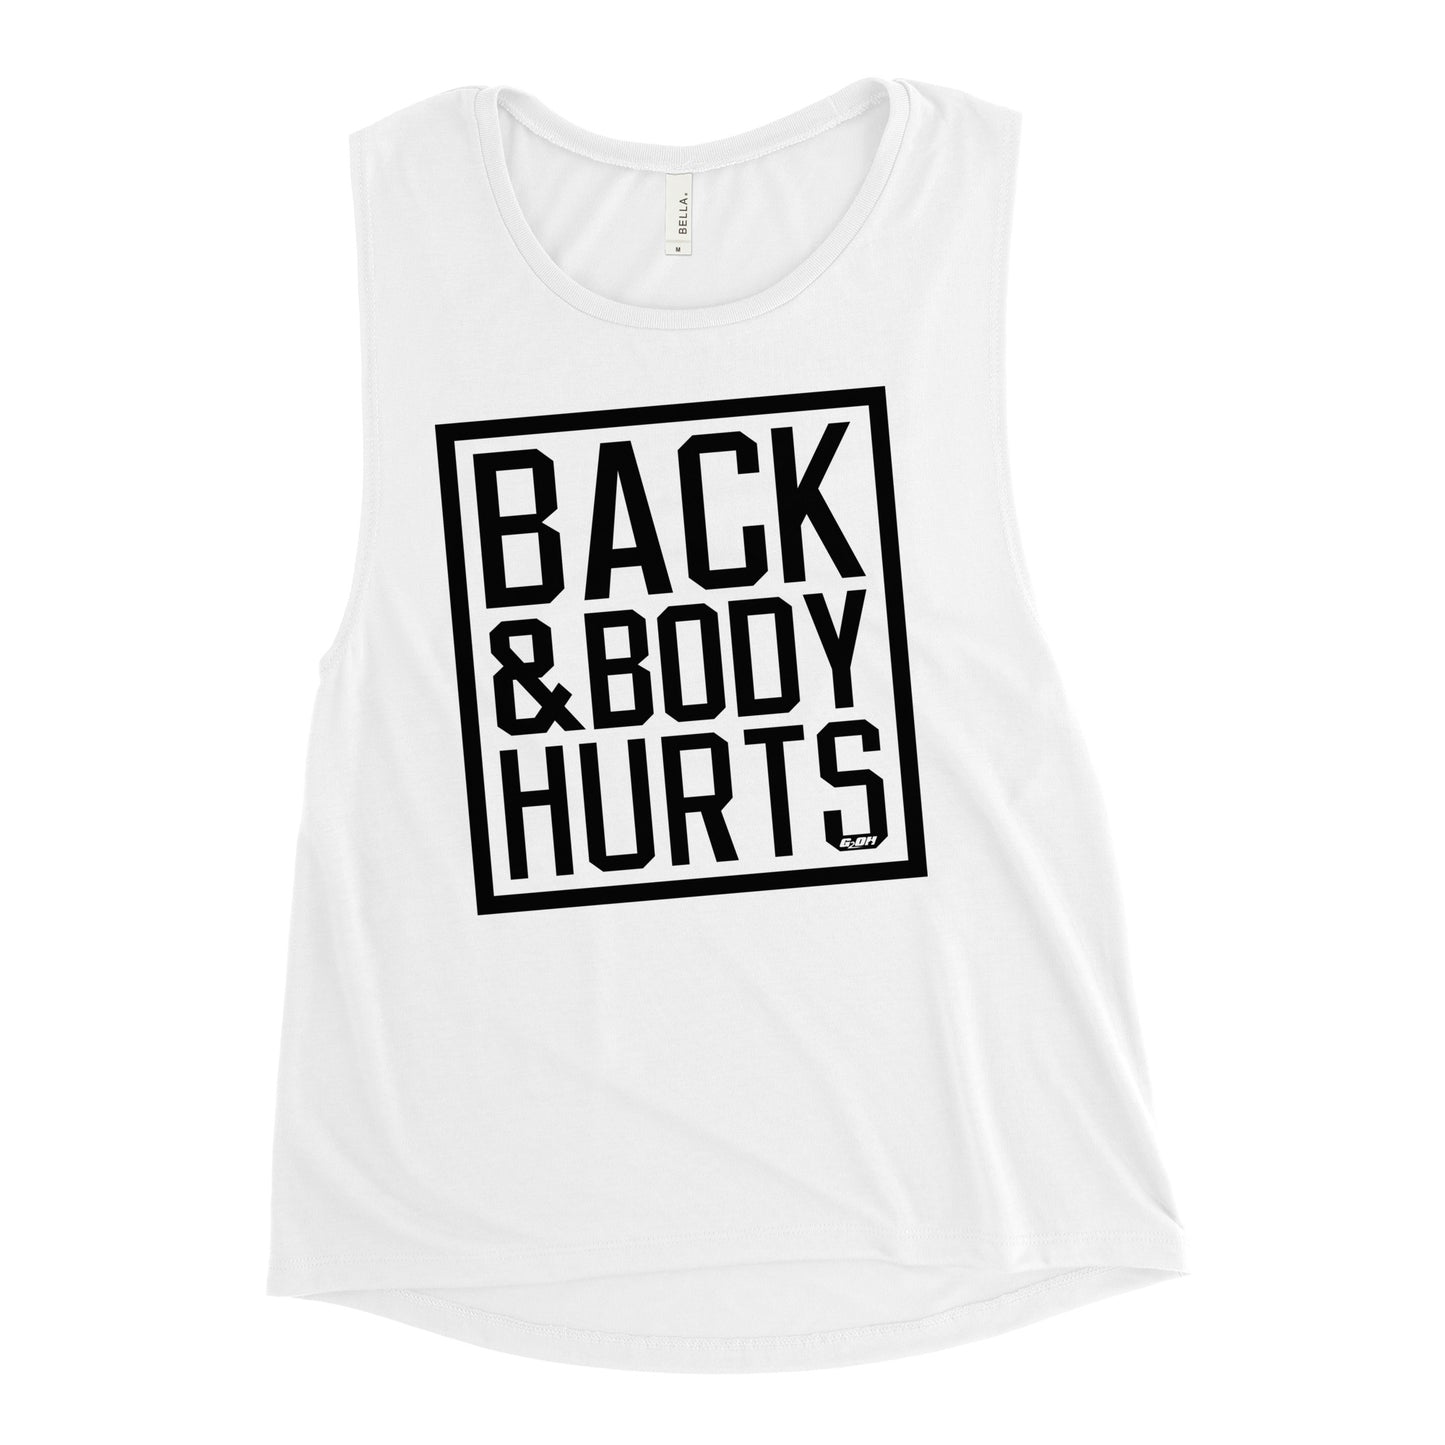 Back & Body Hurts Women's Muscle Tank